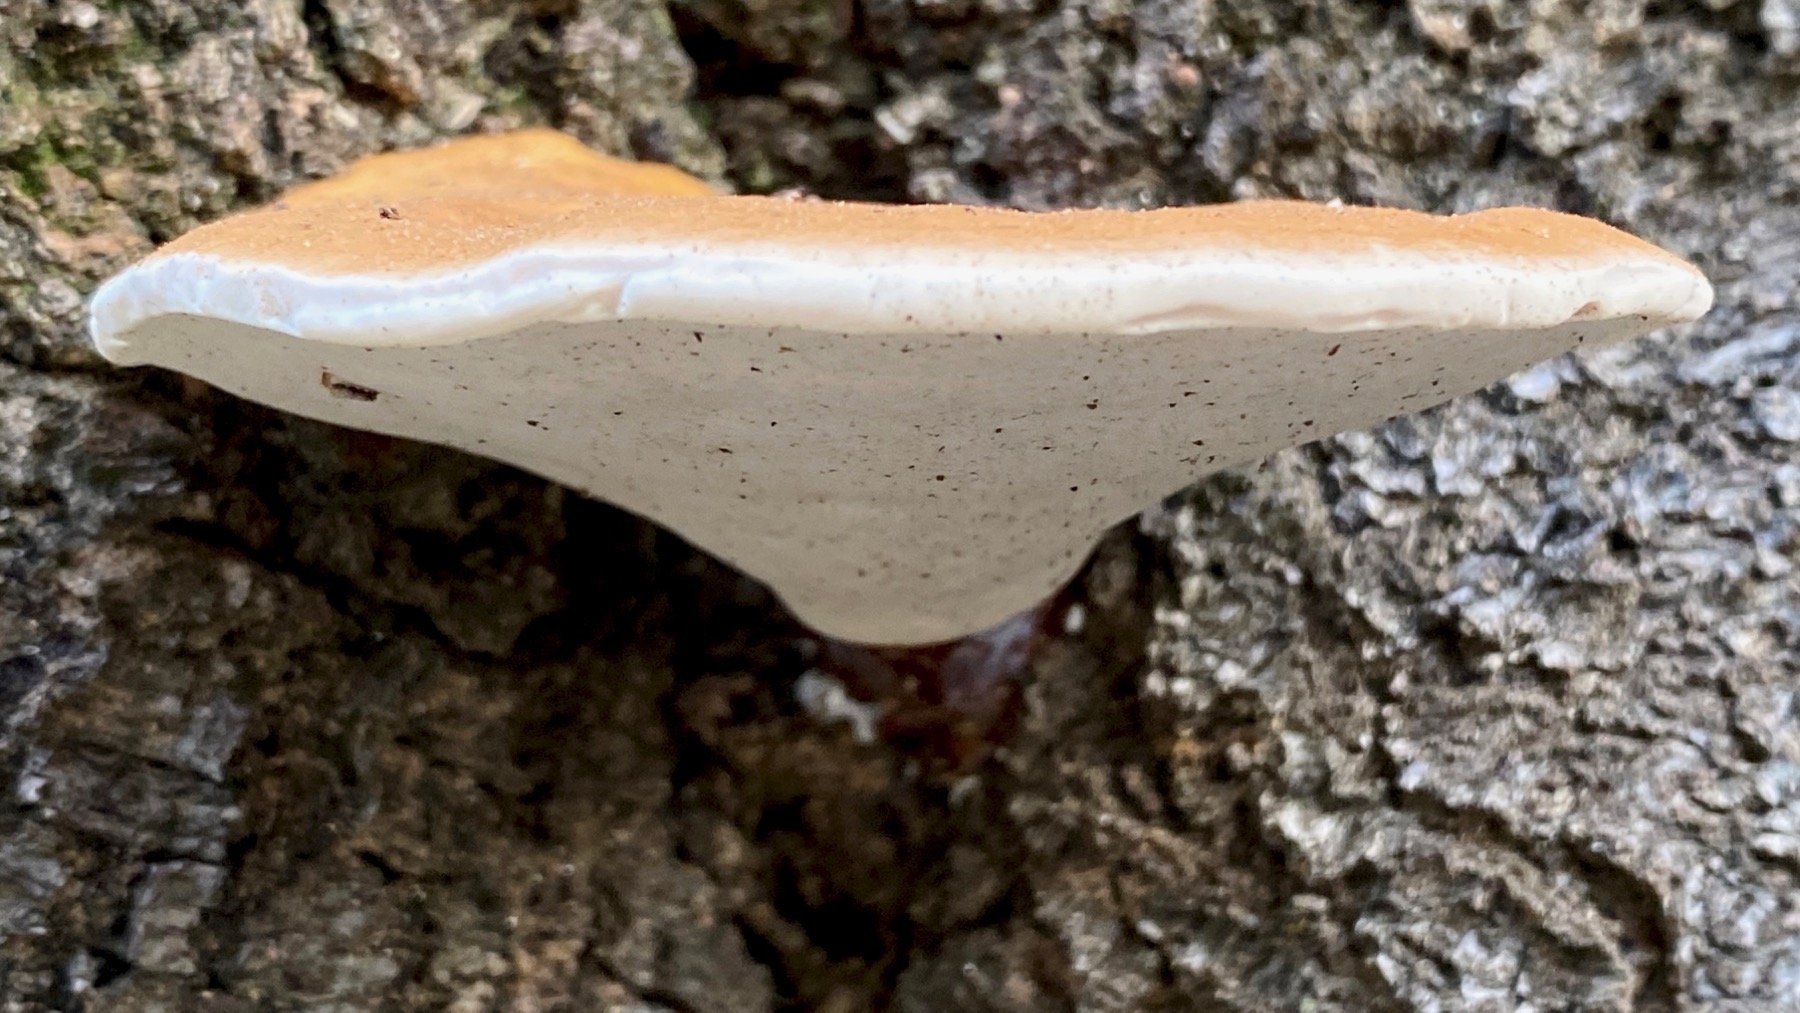 Shelf fungi edge